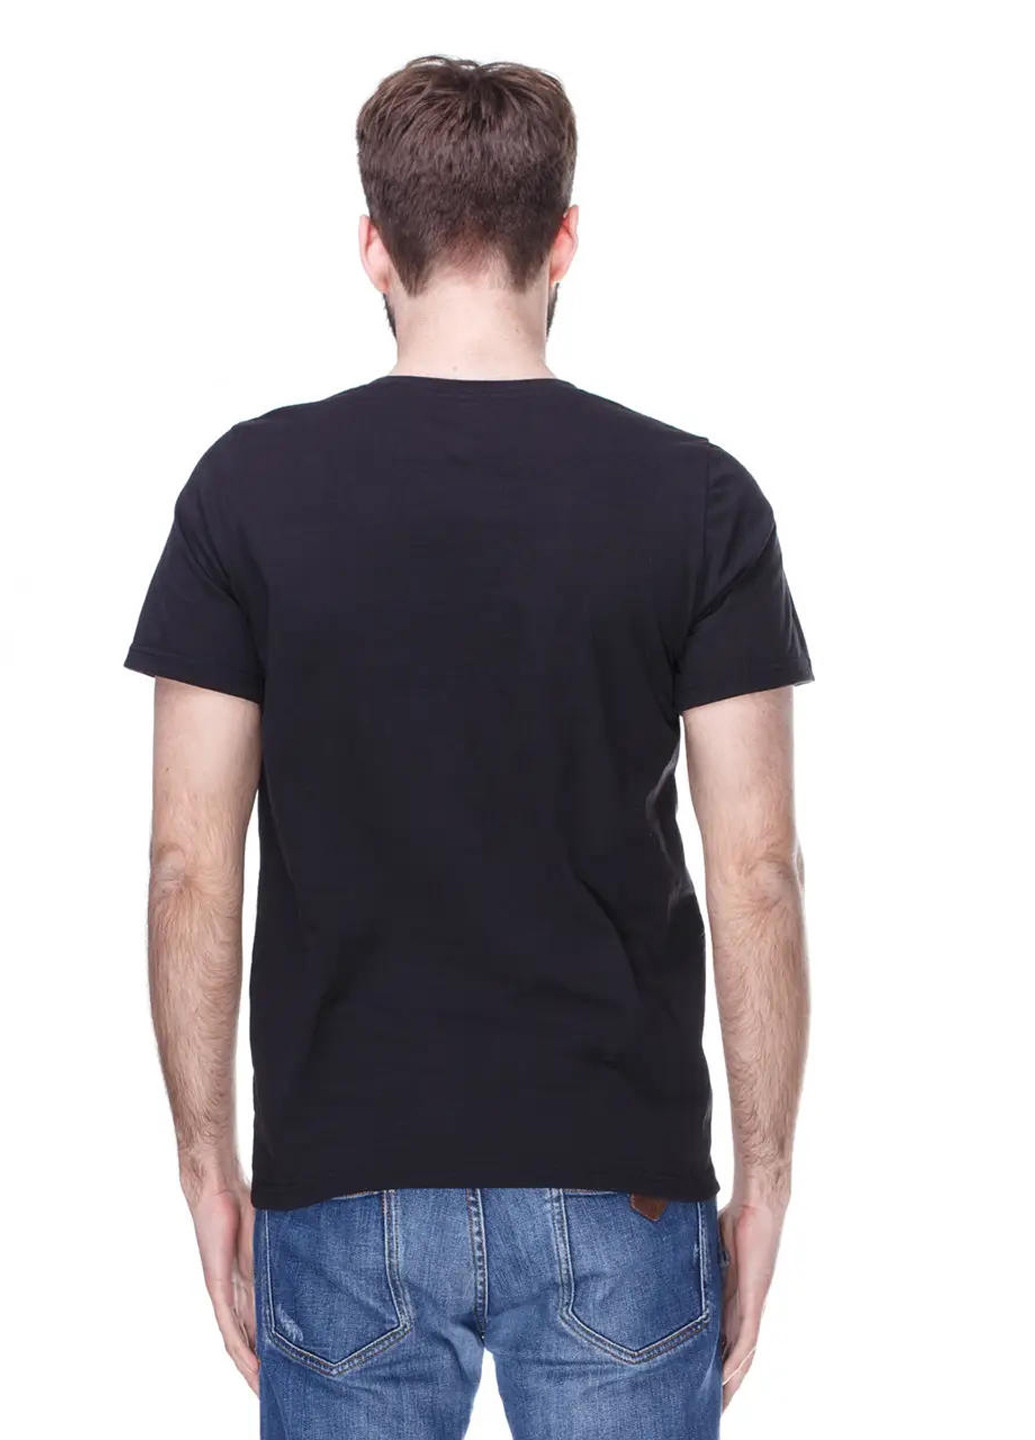 Черная мужская футболка, круглое горло Sport Line